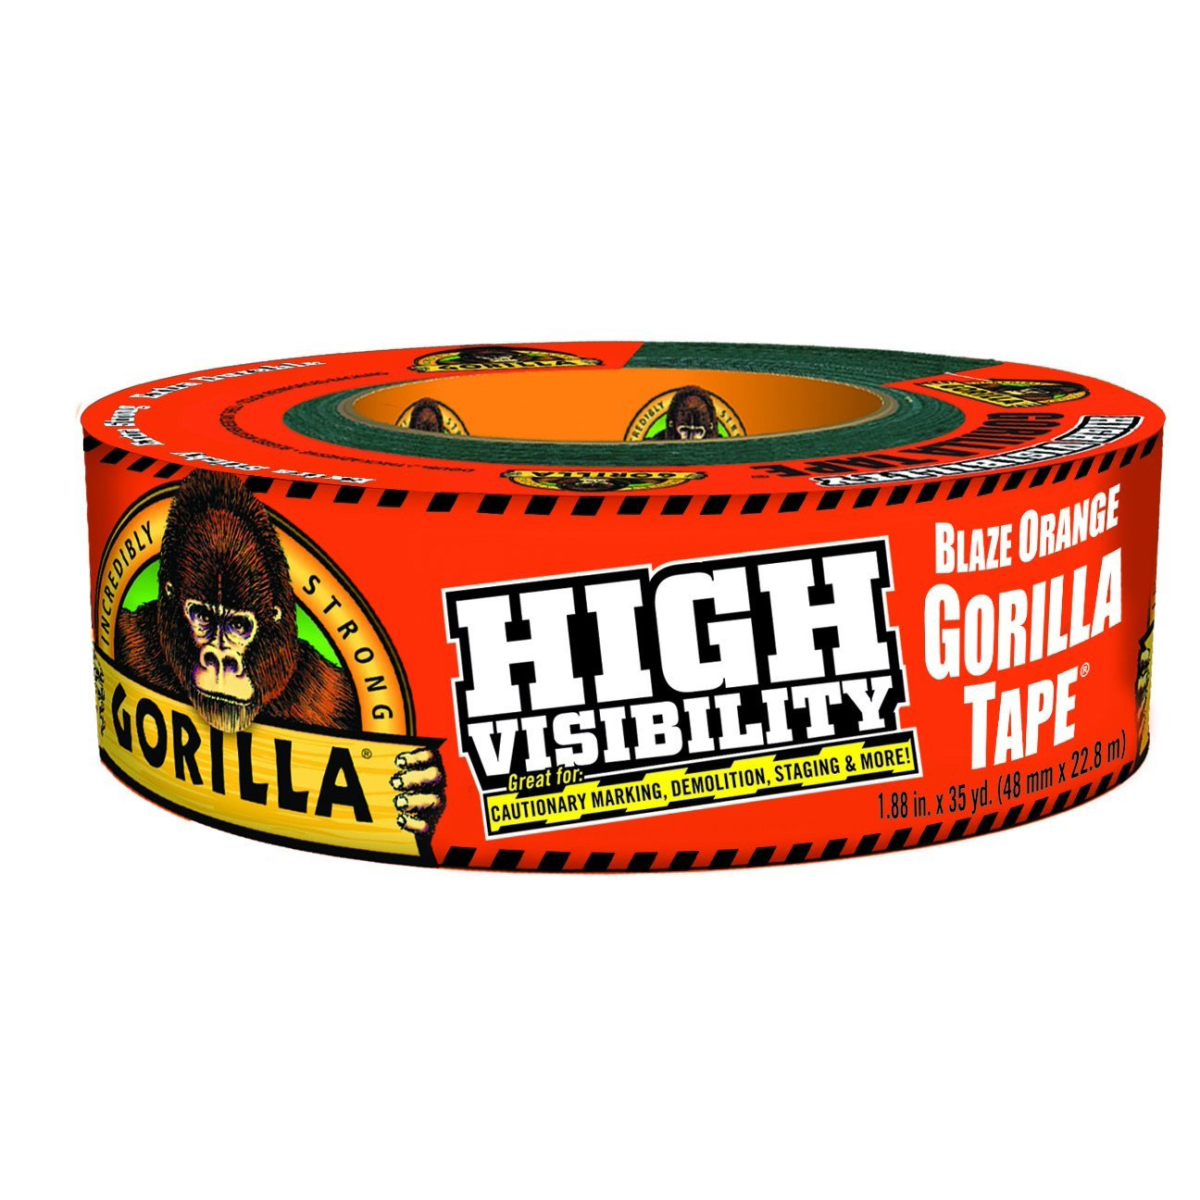 Gorilla Blaze Orange Duct Tape [Discontinued] (High Visibility)